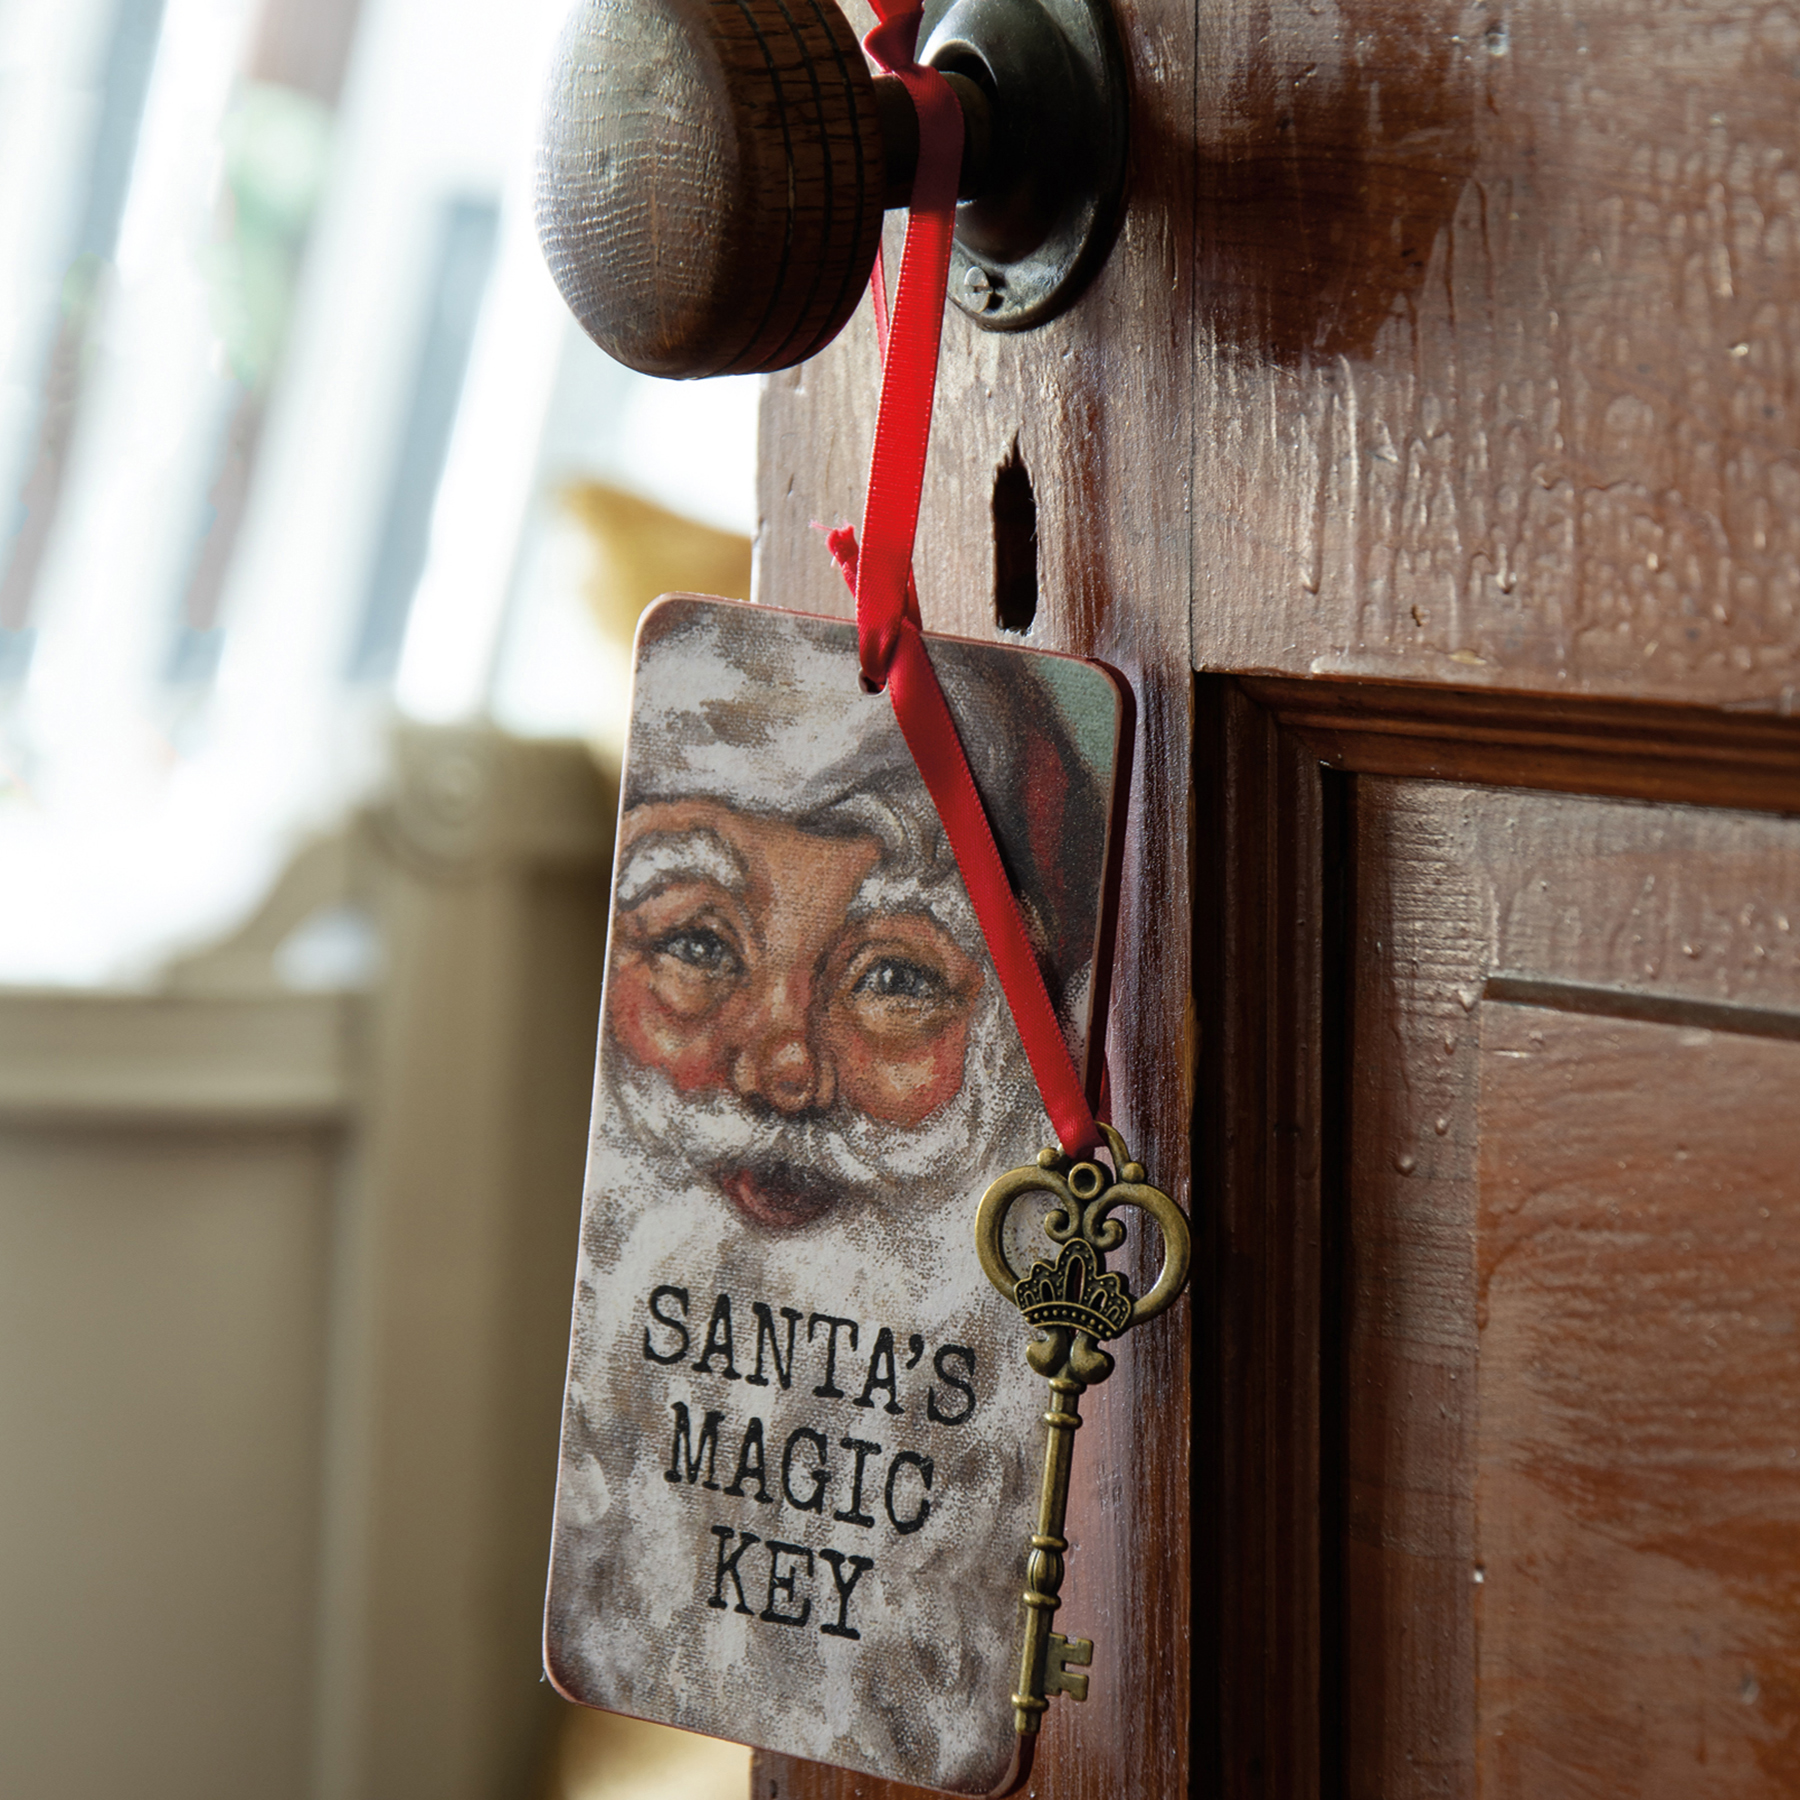 JAMsCraftCloset Ornaments Santas Magic Key Square 2 by 2 inch Ceramic Tile with Poem Christmas Decor Gun Metal Key